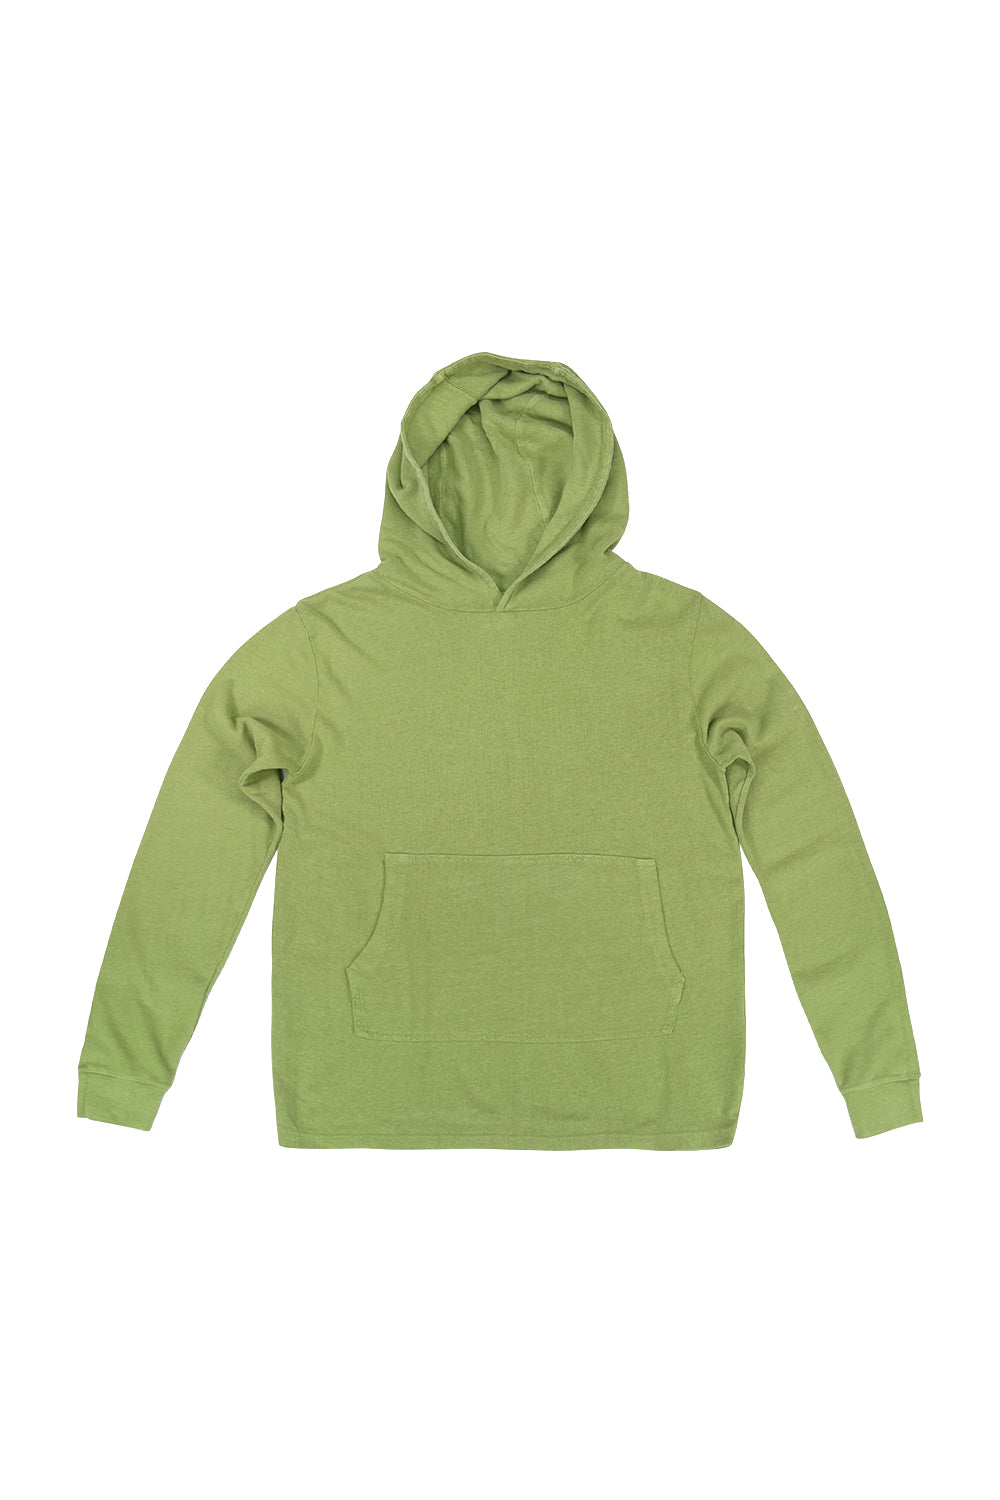 Santa Cruz Hooded Long Sleeve | Jungmaven Hemp Clothing & Accessories / Color: Dark Matcha